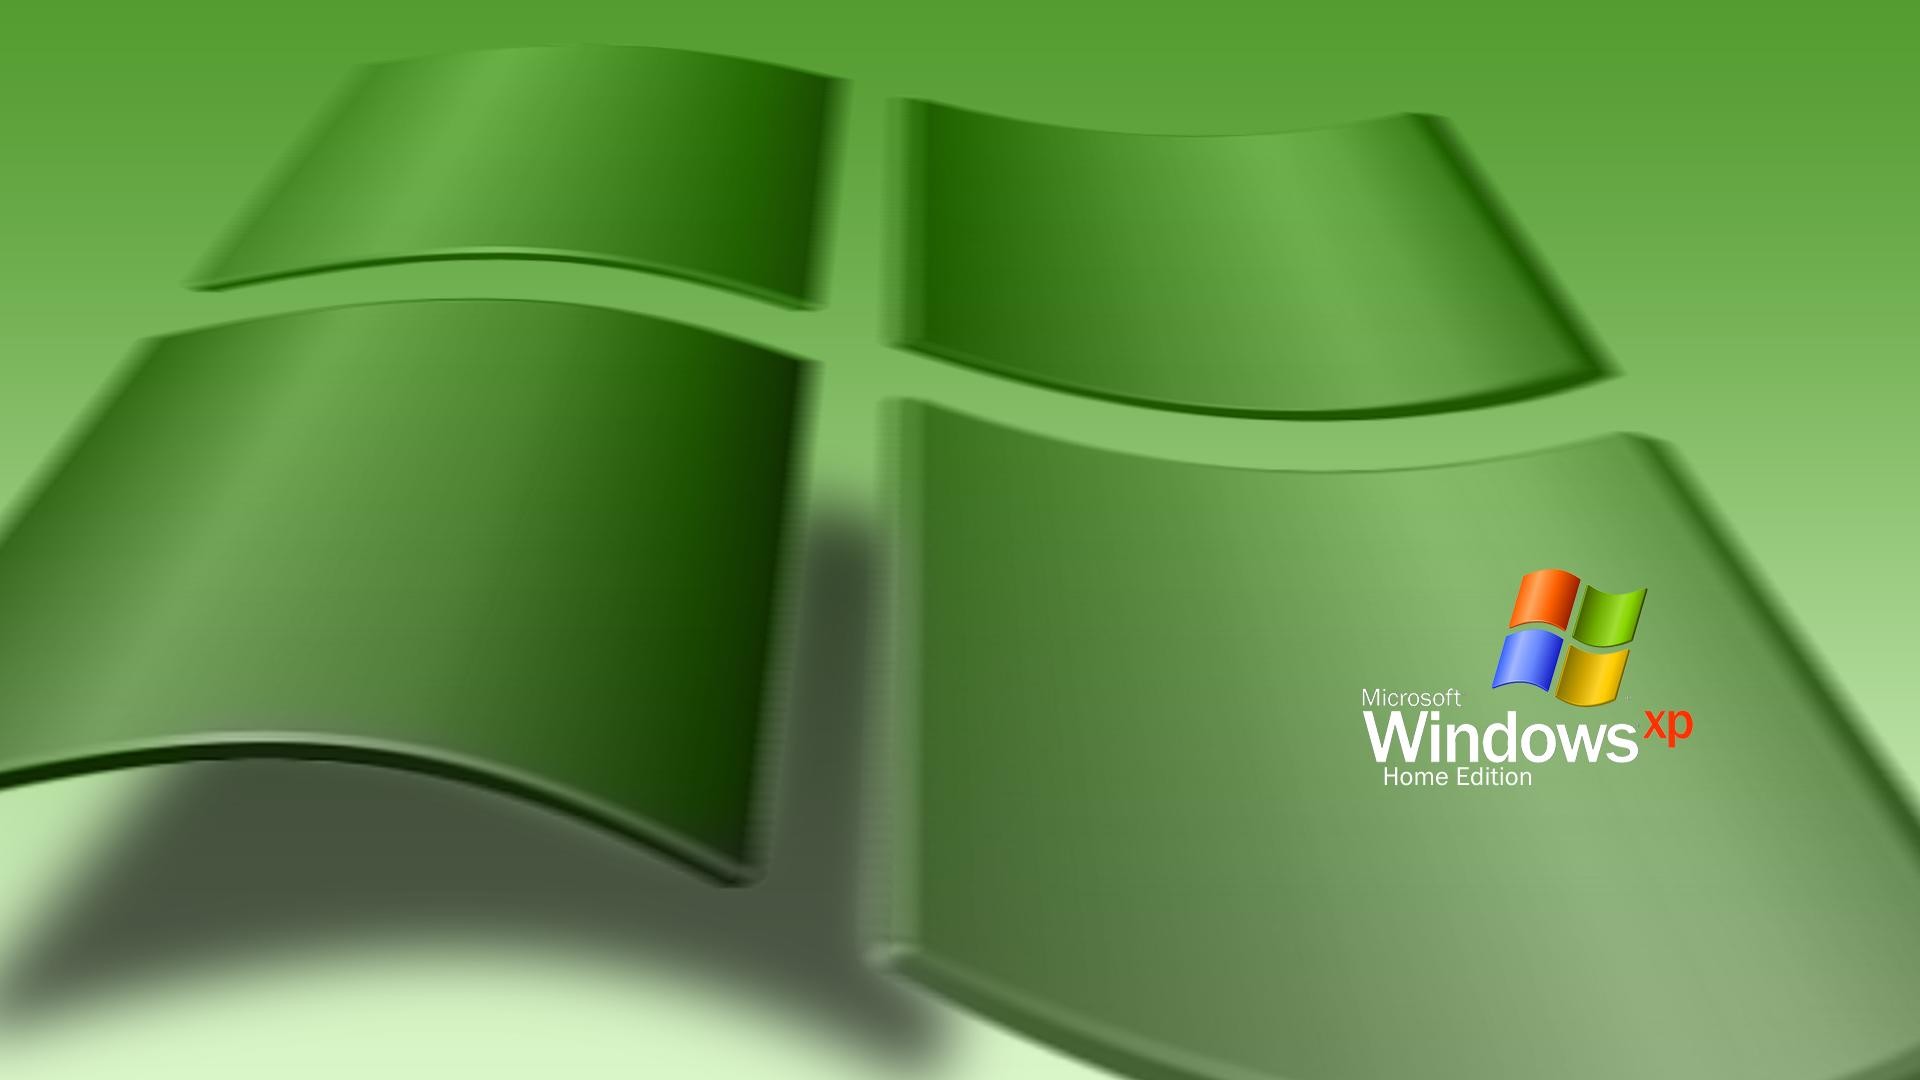 1920x1080 Windows XP Home Edition Wallpaper - WallpaperSafari